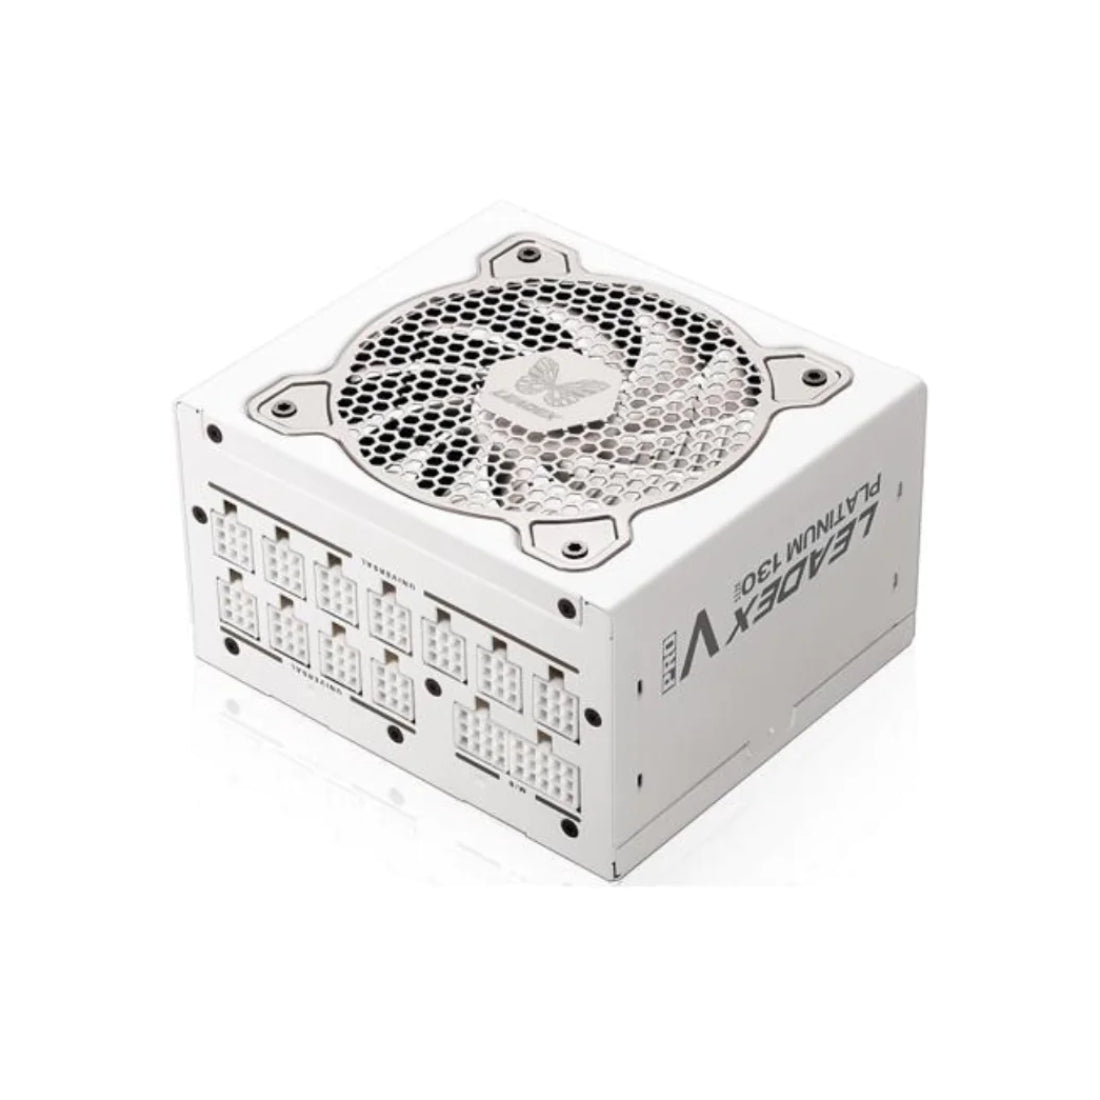 Super Flower Leadex V Platinum PRO 850W 80+ Fully Modular Power Supply - White - مزود الطاقة - Store 974 | ستور ٩٧٤